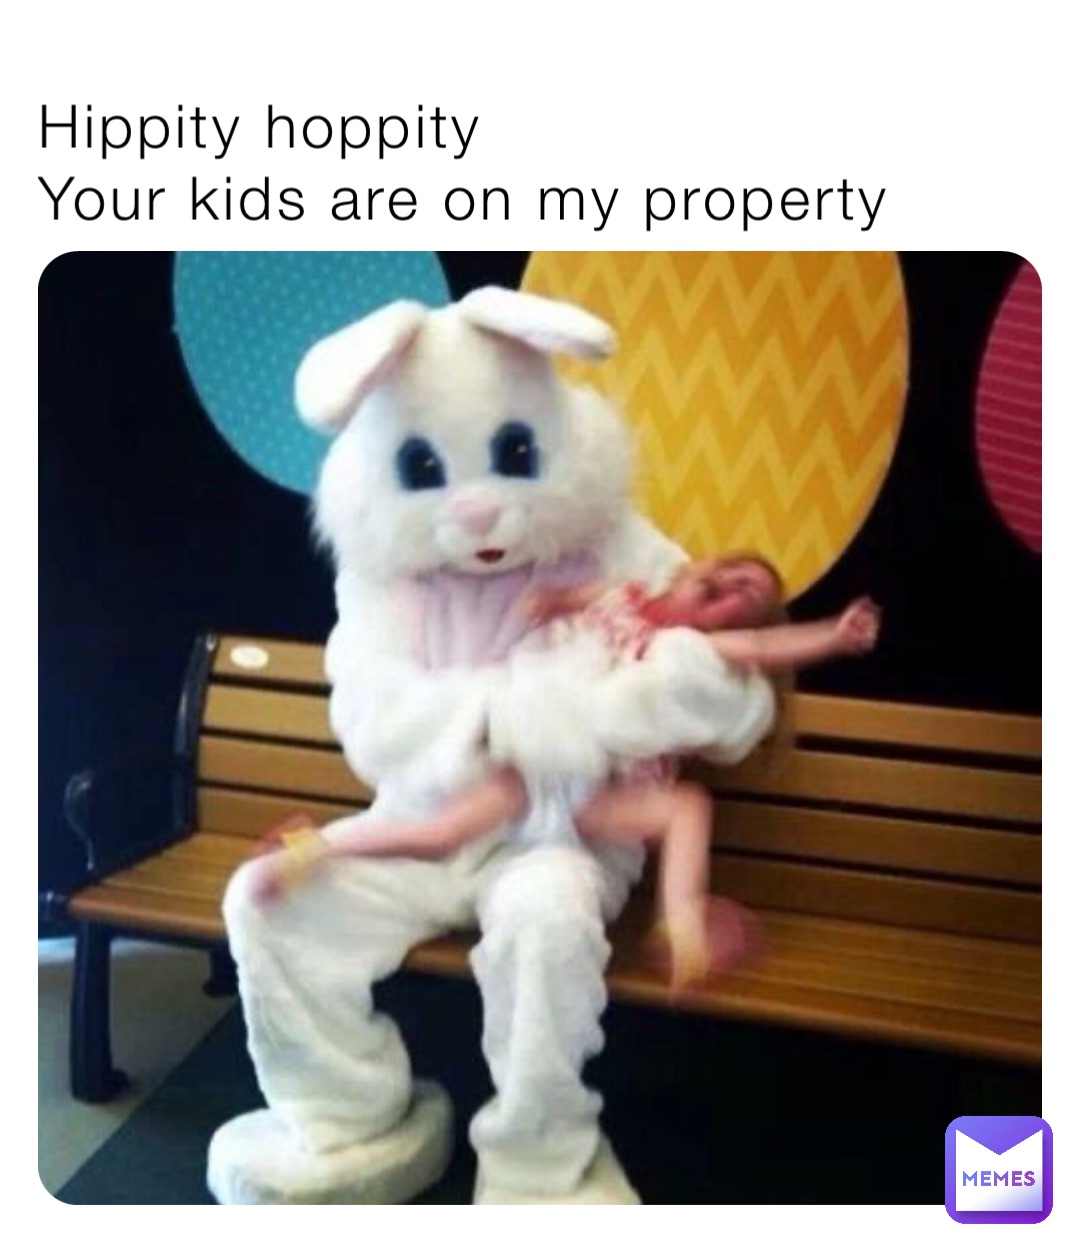 Hippity hoppity
Your kids are on my property